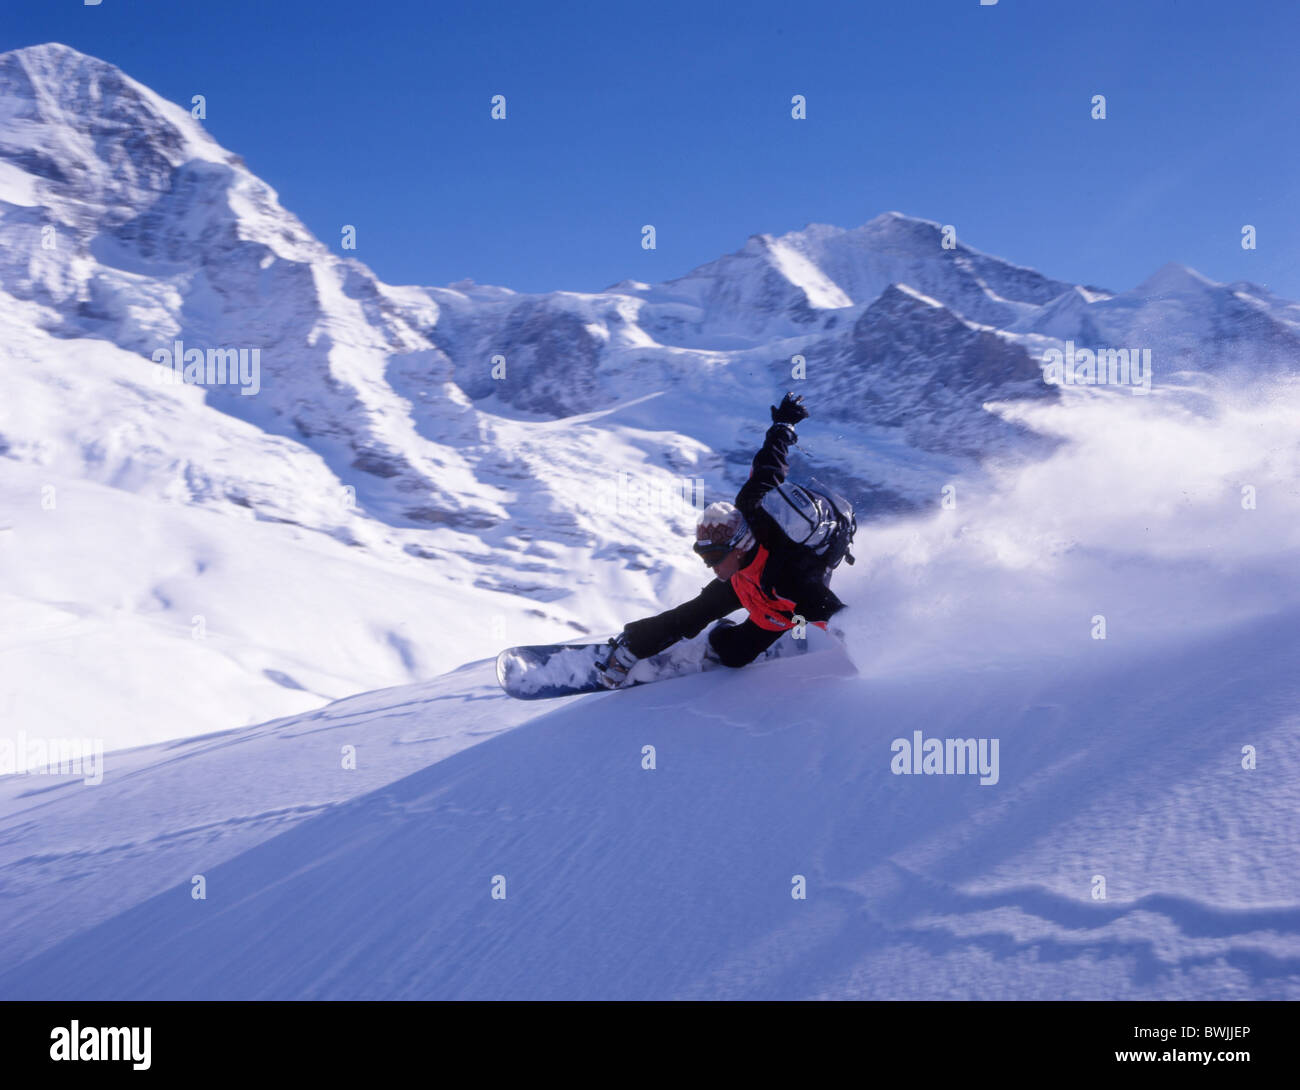 Snowboarder snowboard Snowboarding deep snow Free riding winter sports mountains Alps snow winter sports Kl Stock Photo